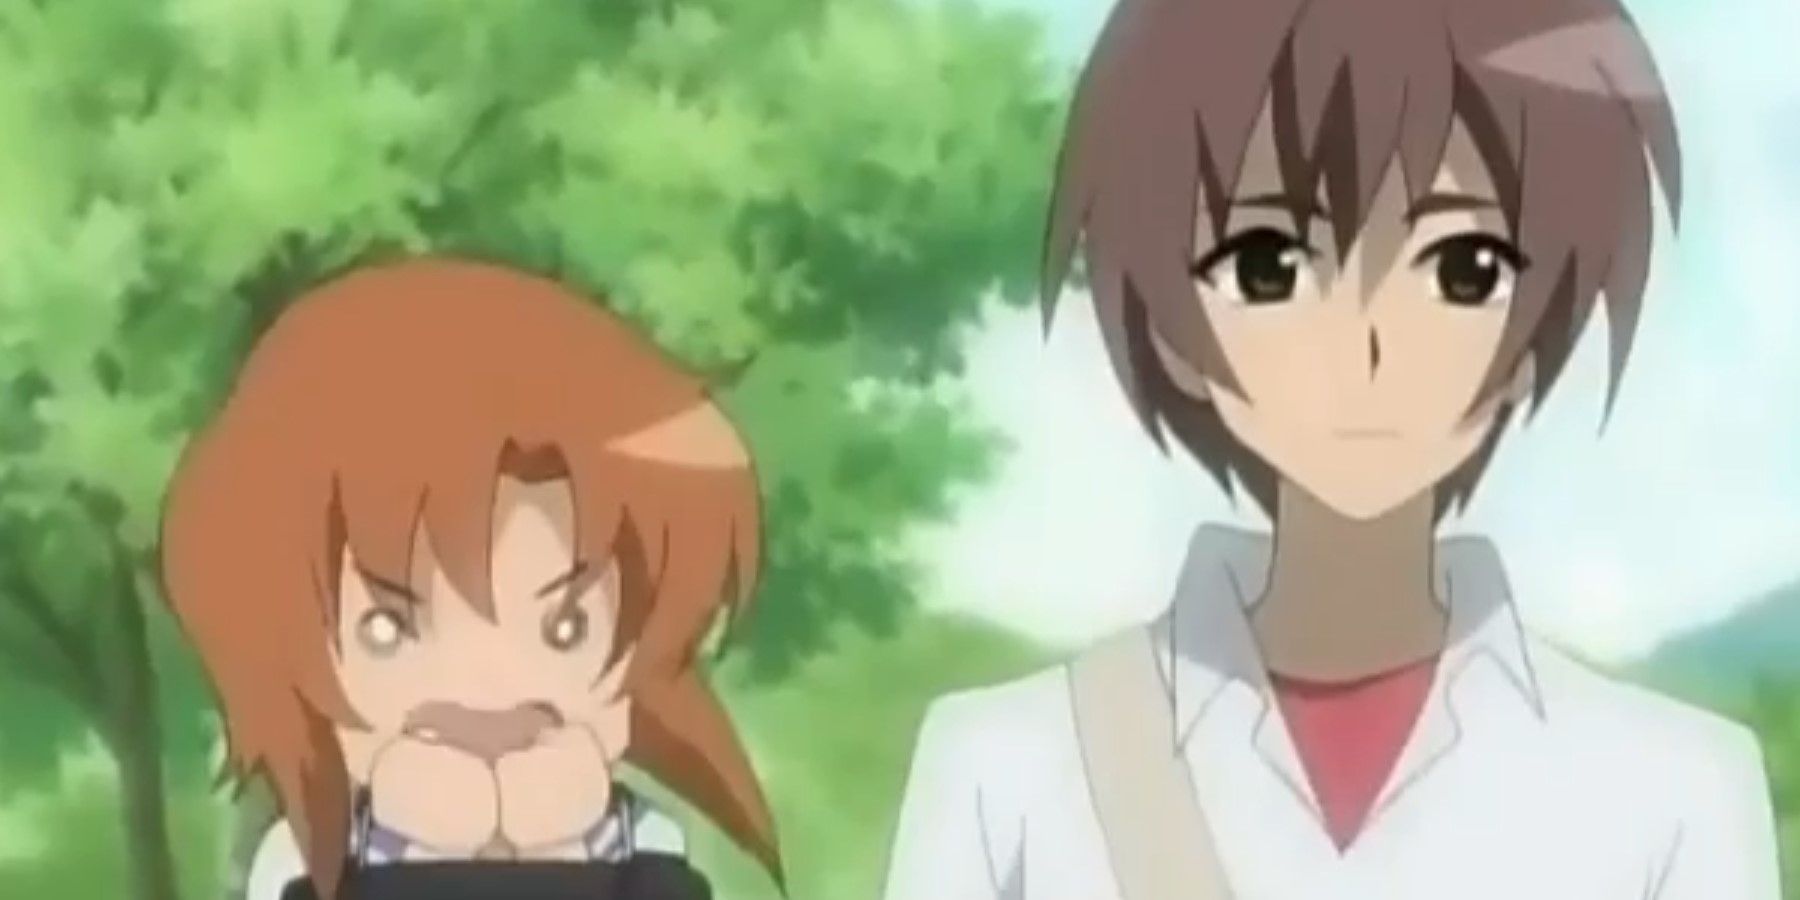 Higurashi When They Cry Keiichi Maebara and Rena Ryugu walking to school